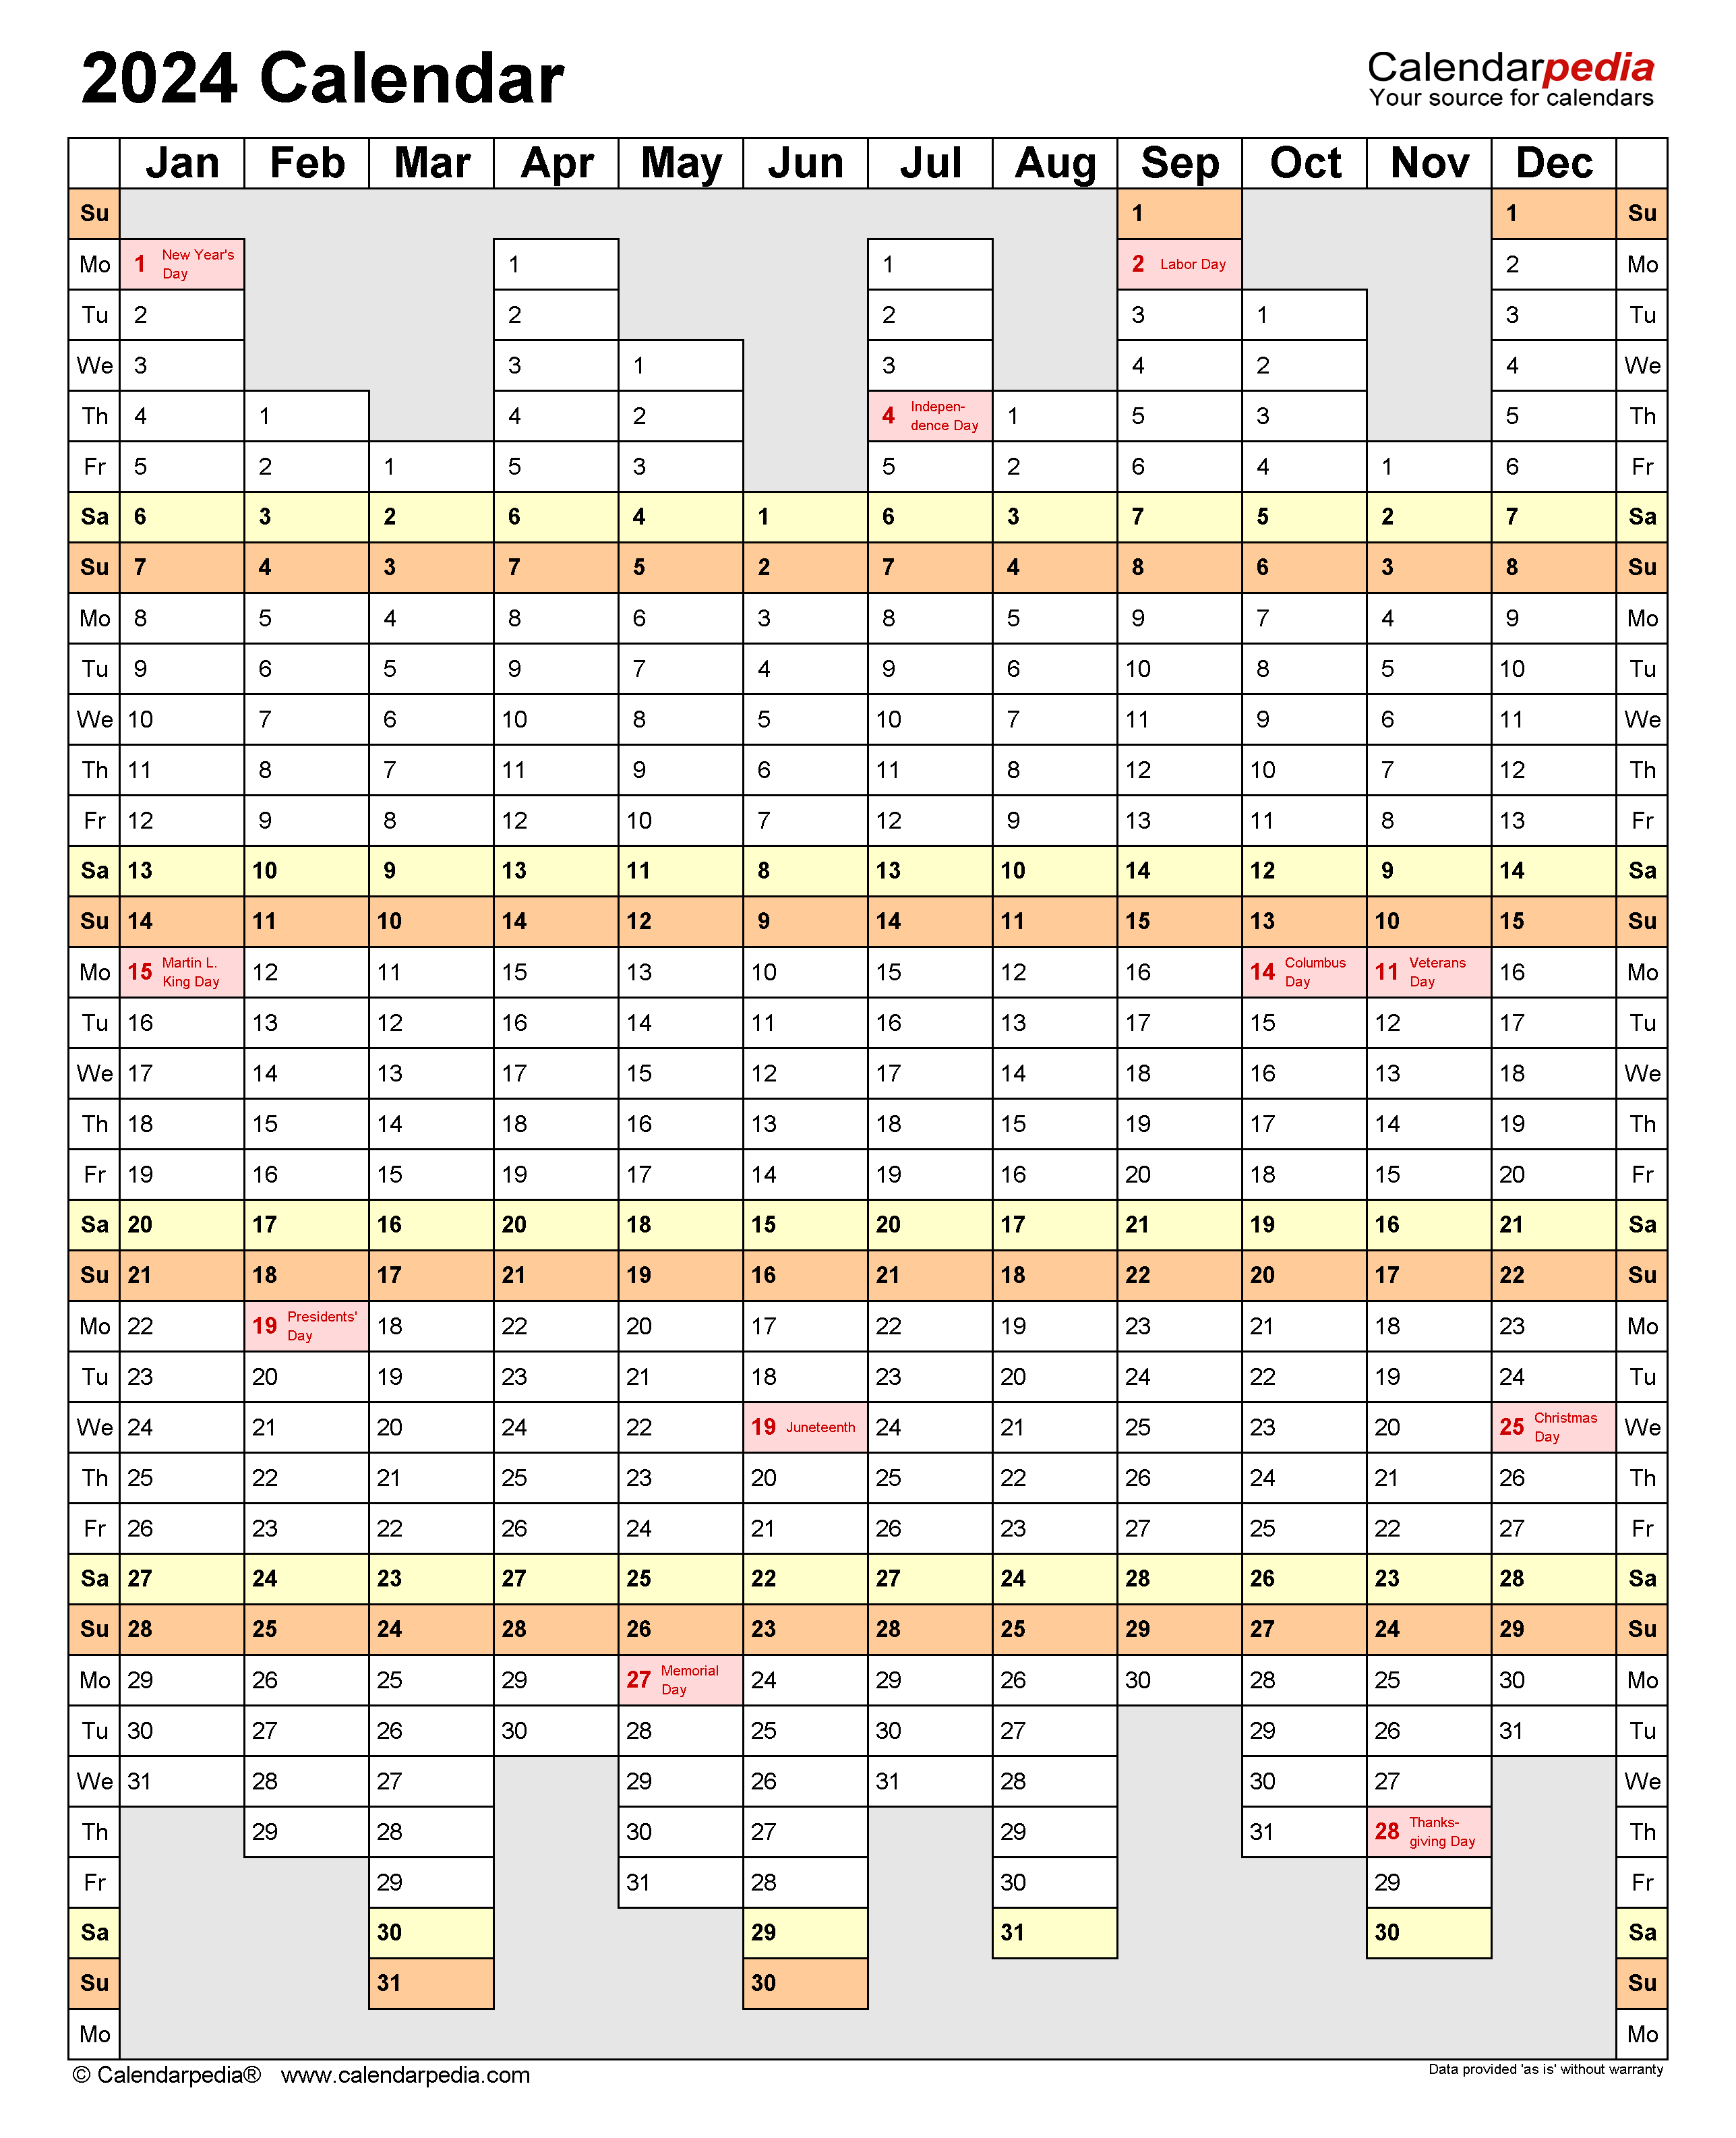 2024 Calendar Template Excel Free Download Calendar 2024 All Holidays - Free Printable 2024 Excel Calendar